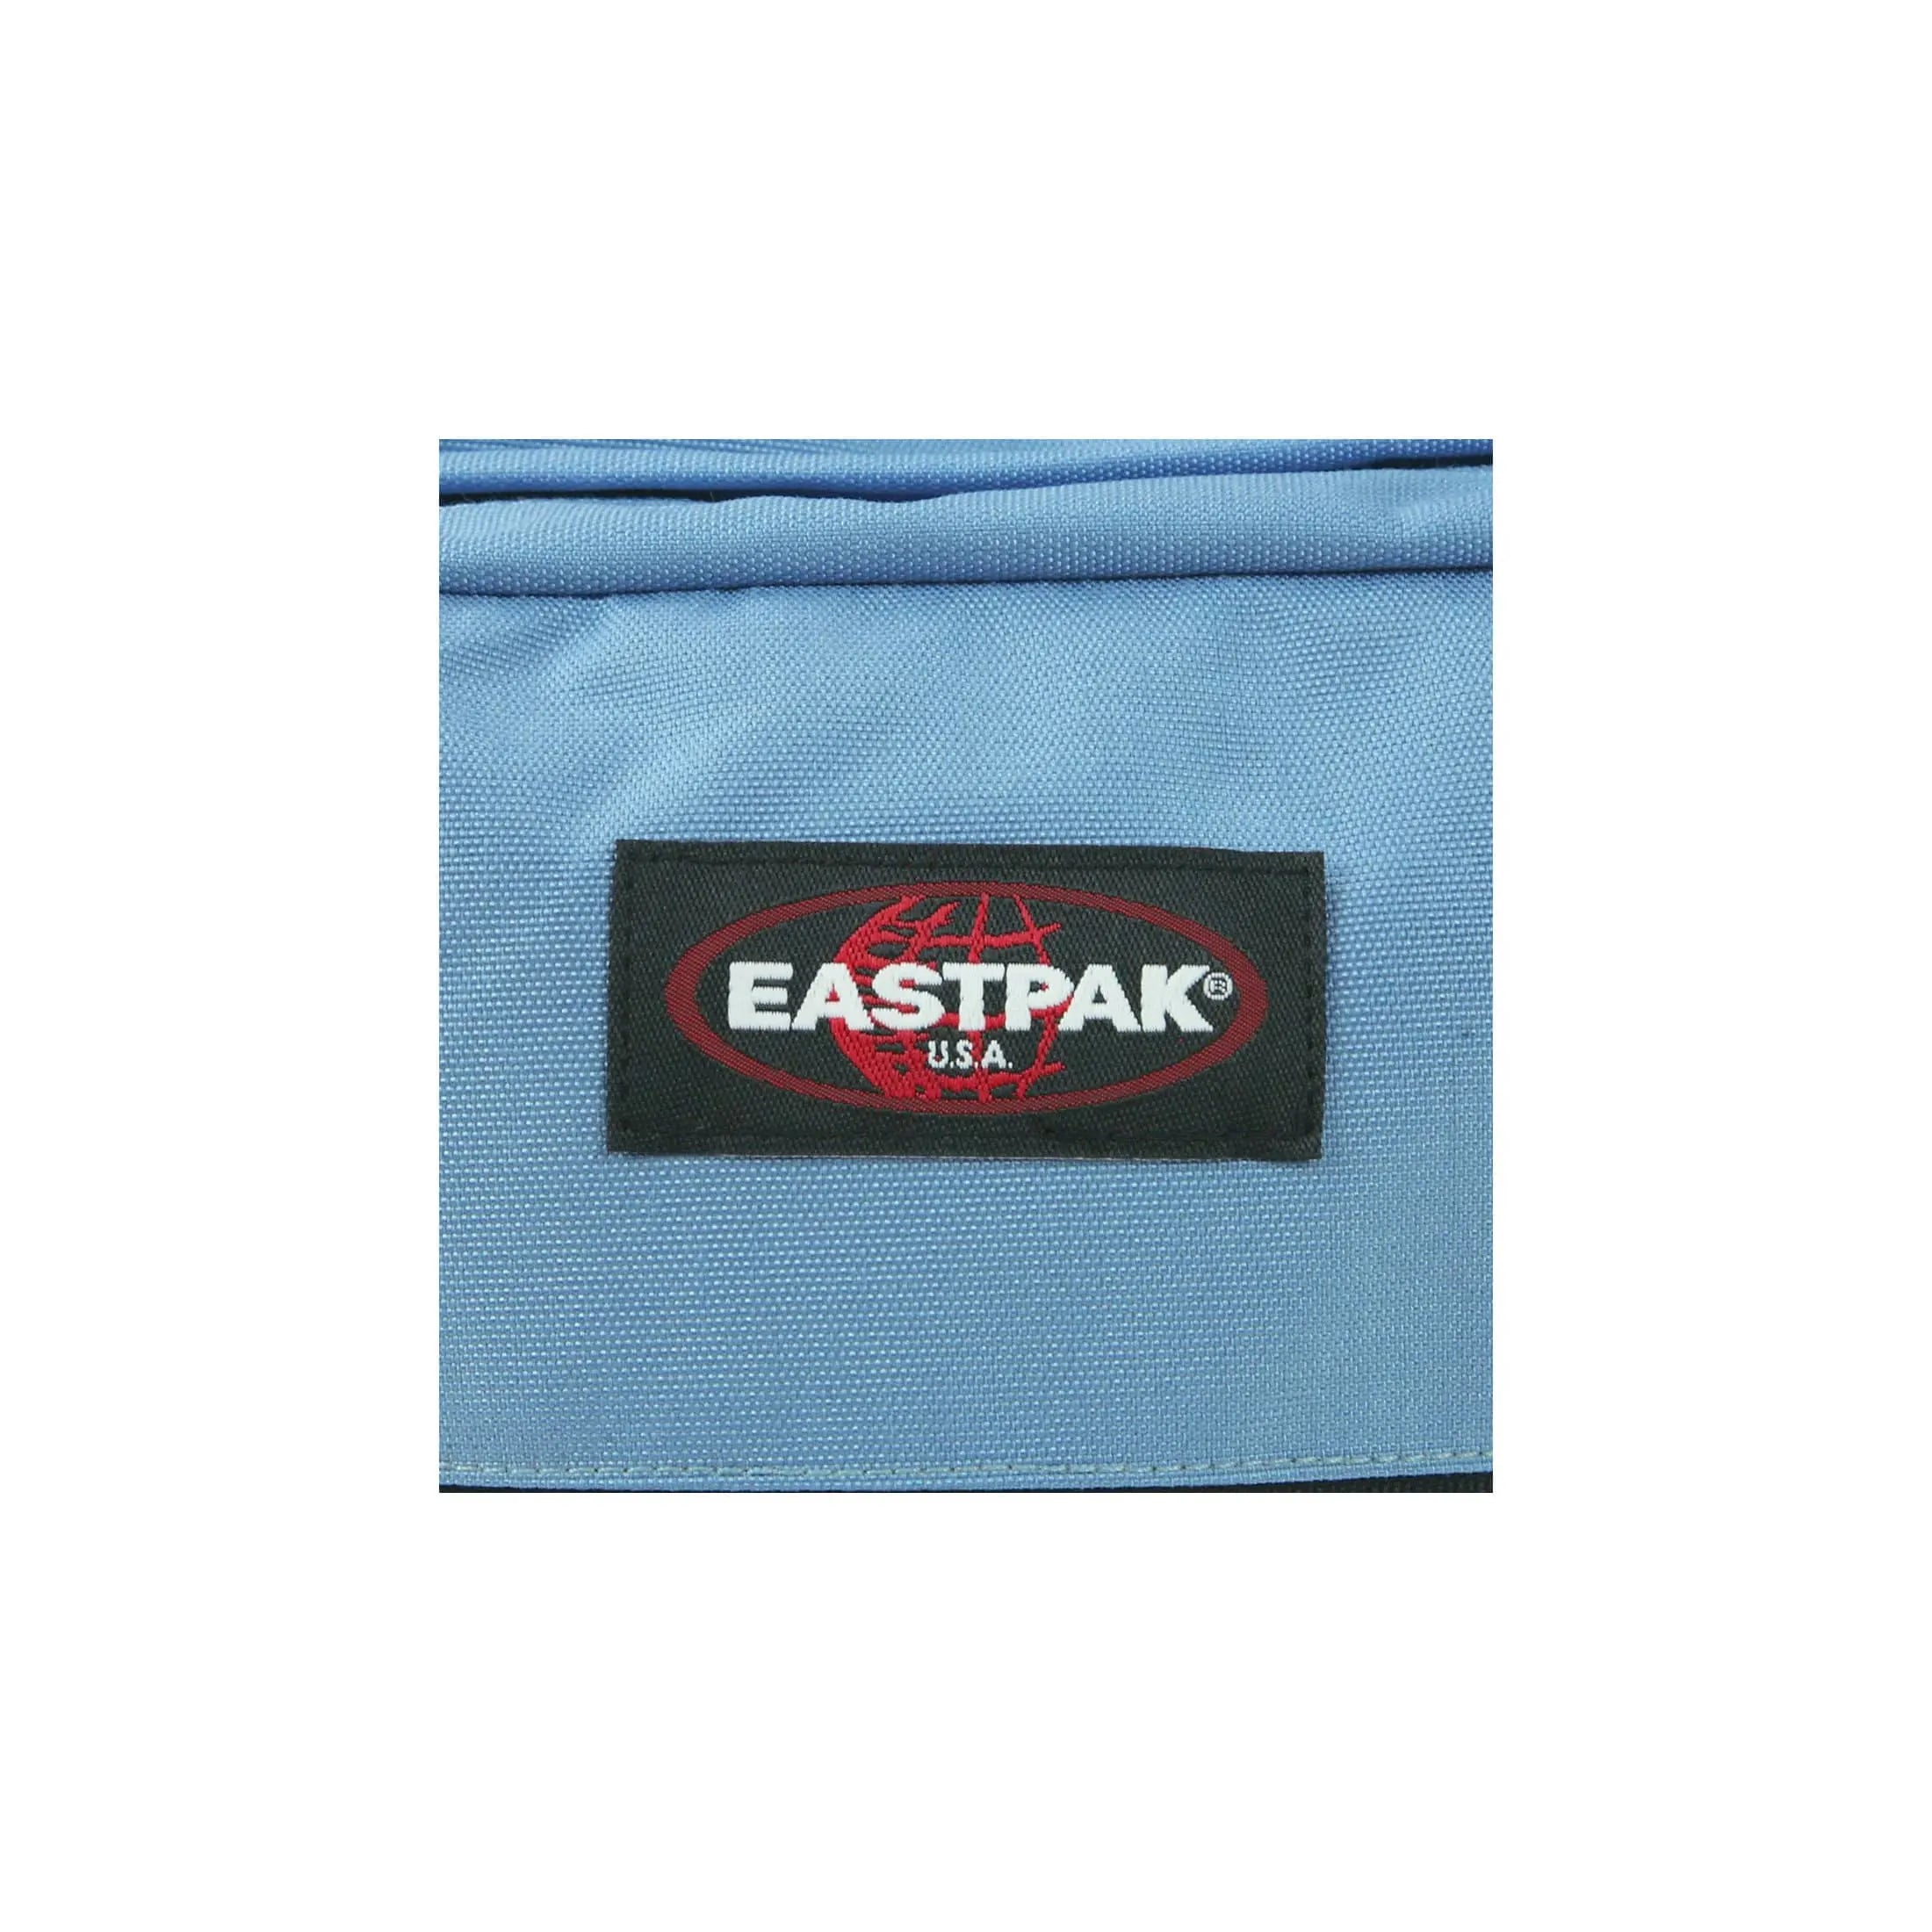 Eastpak Authentic Pinnacle sac à dos de loisirs 42 cm - checksange bleu